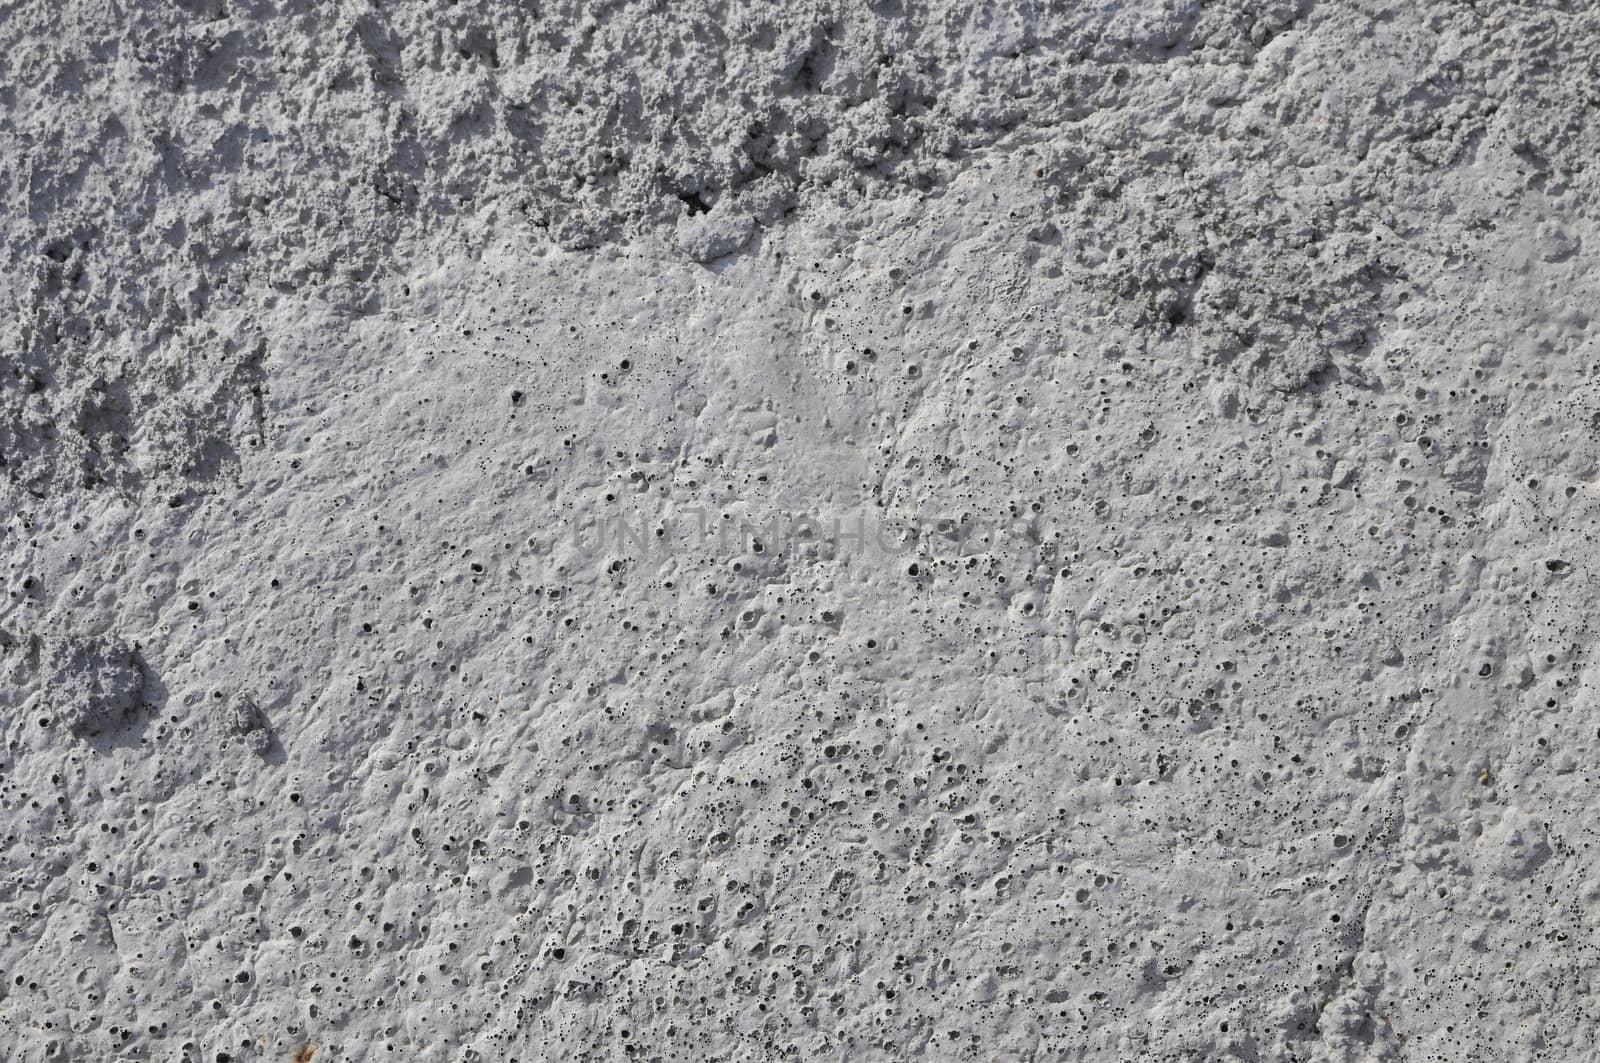 Rough concrete texture by shkyo30